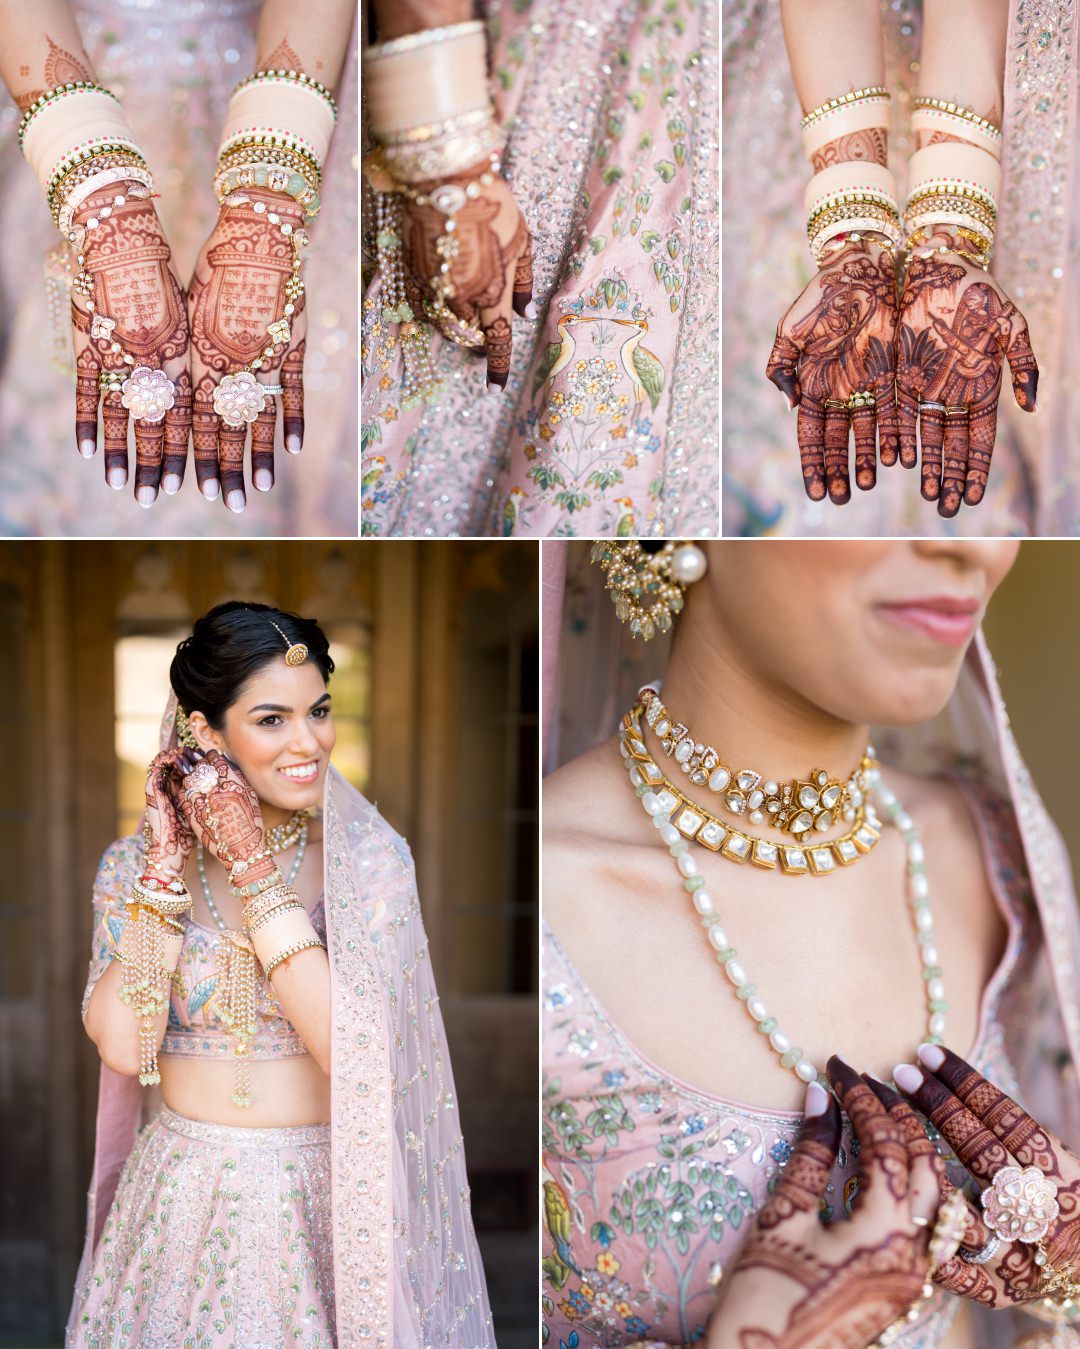 close up details of Indian bride